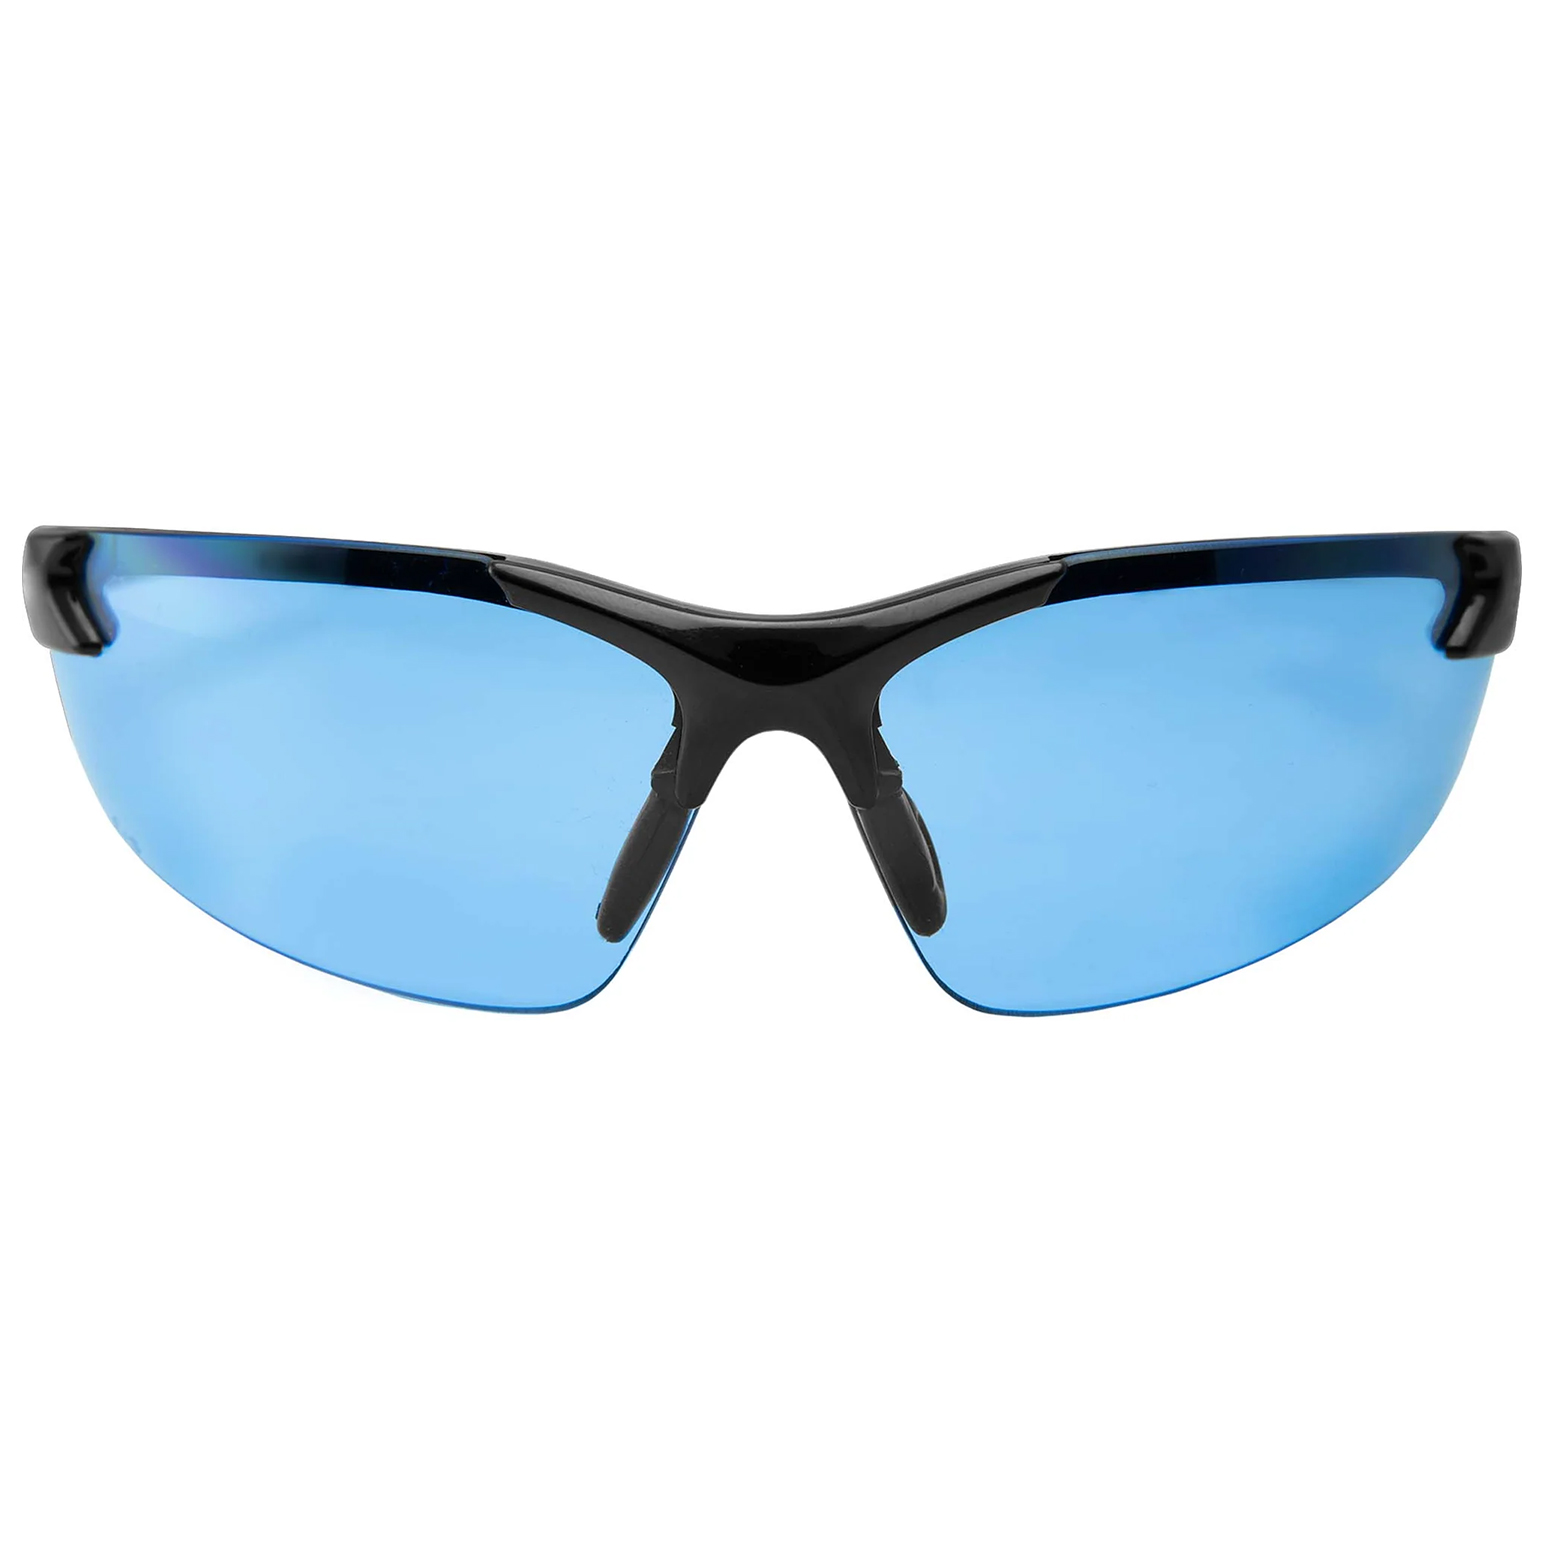 Edge Eyewear Safety Glasses Zorge G2 - 2.0 Magnification - Black/Clear DZ411-2.0-G2